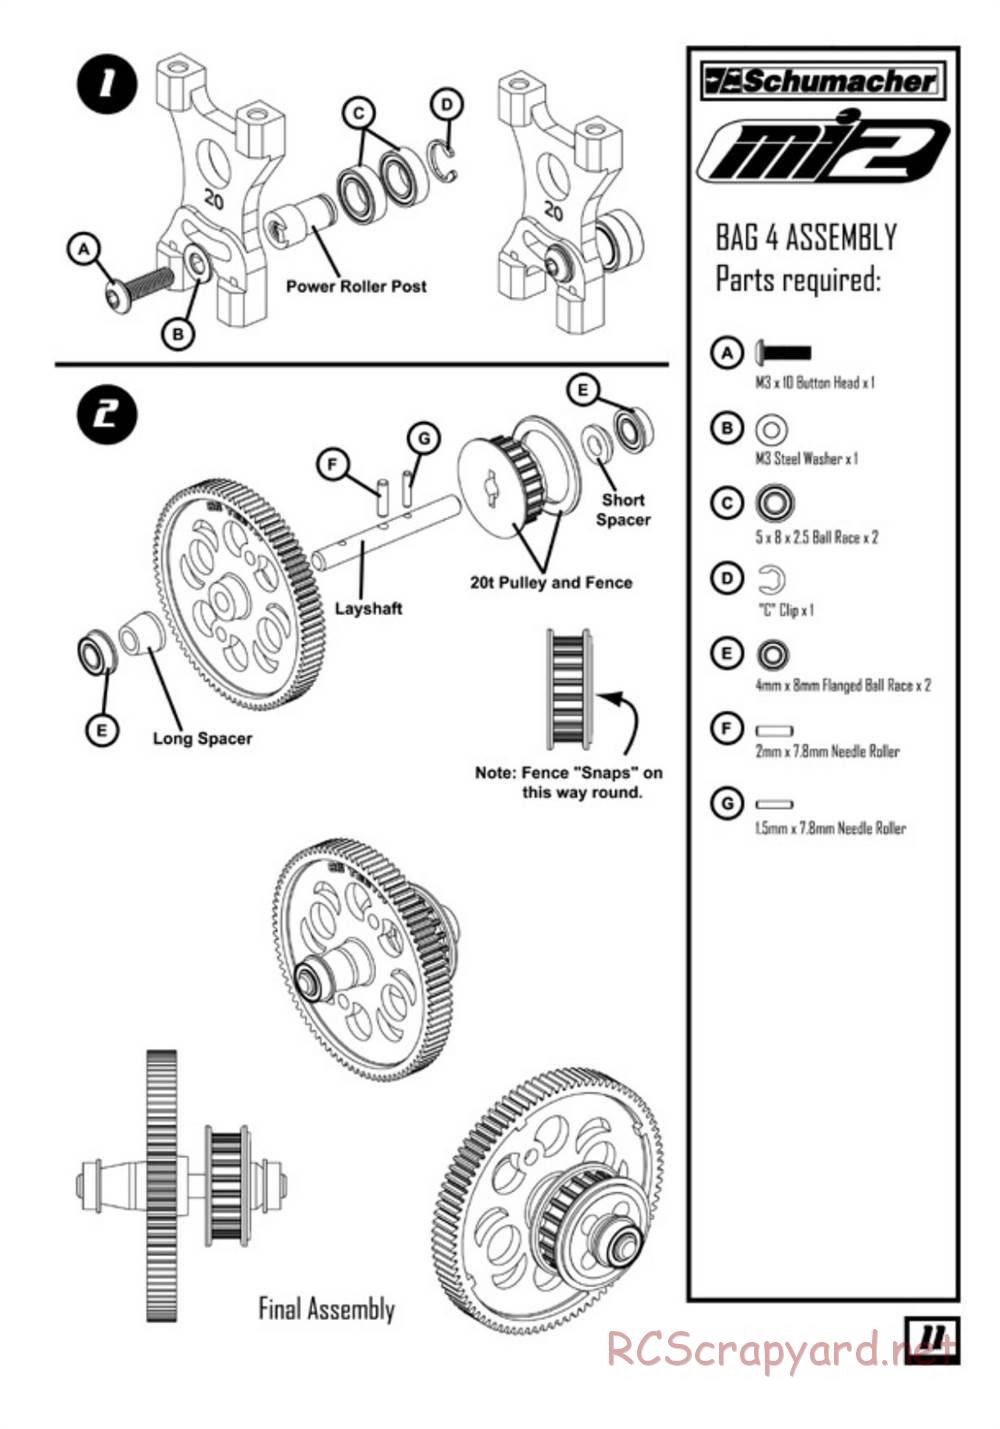 Schumacher - Mi2 - Manual - Page 13